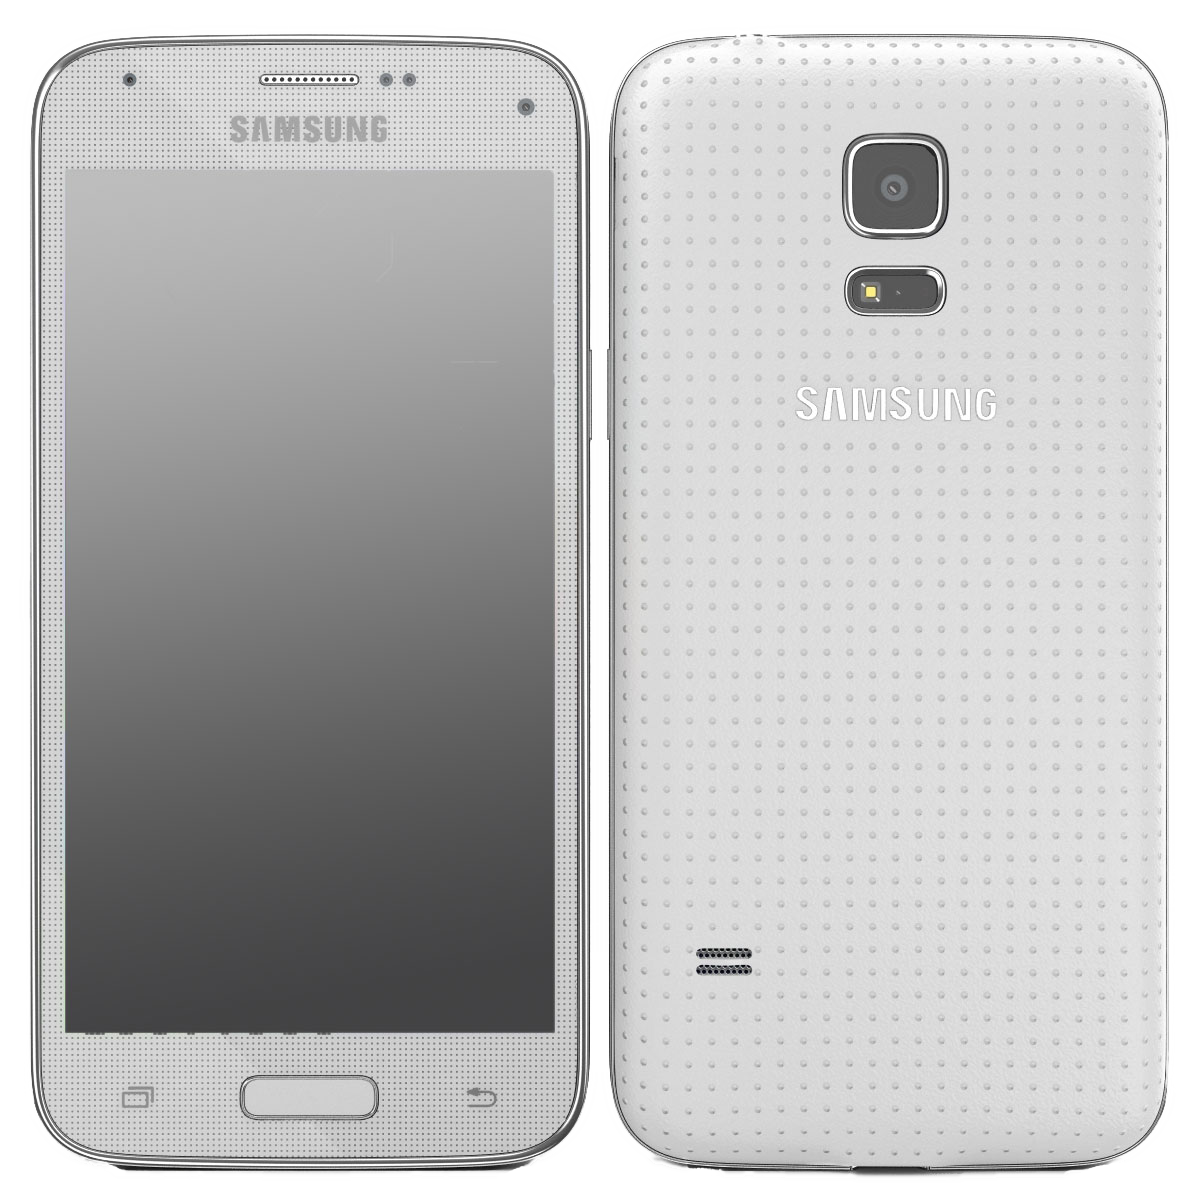 Samsung Galaxy S5 Mini weiß - Onhe Vertrag